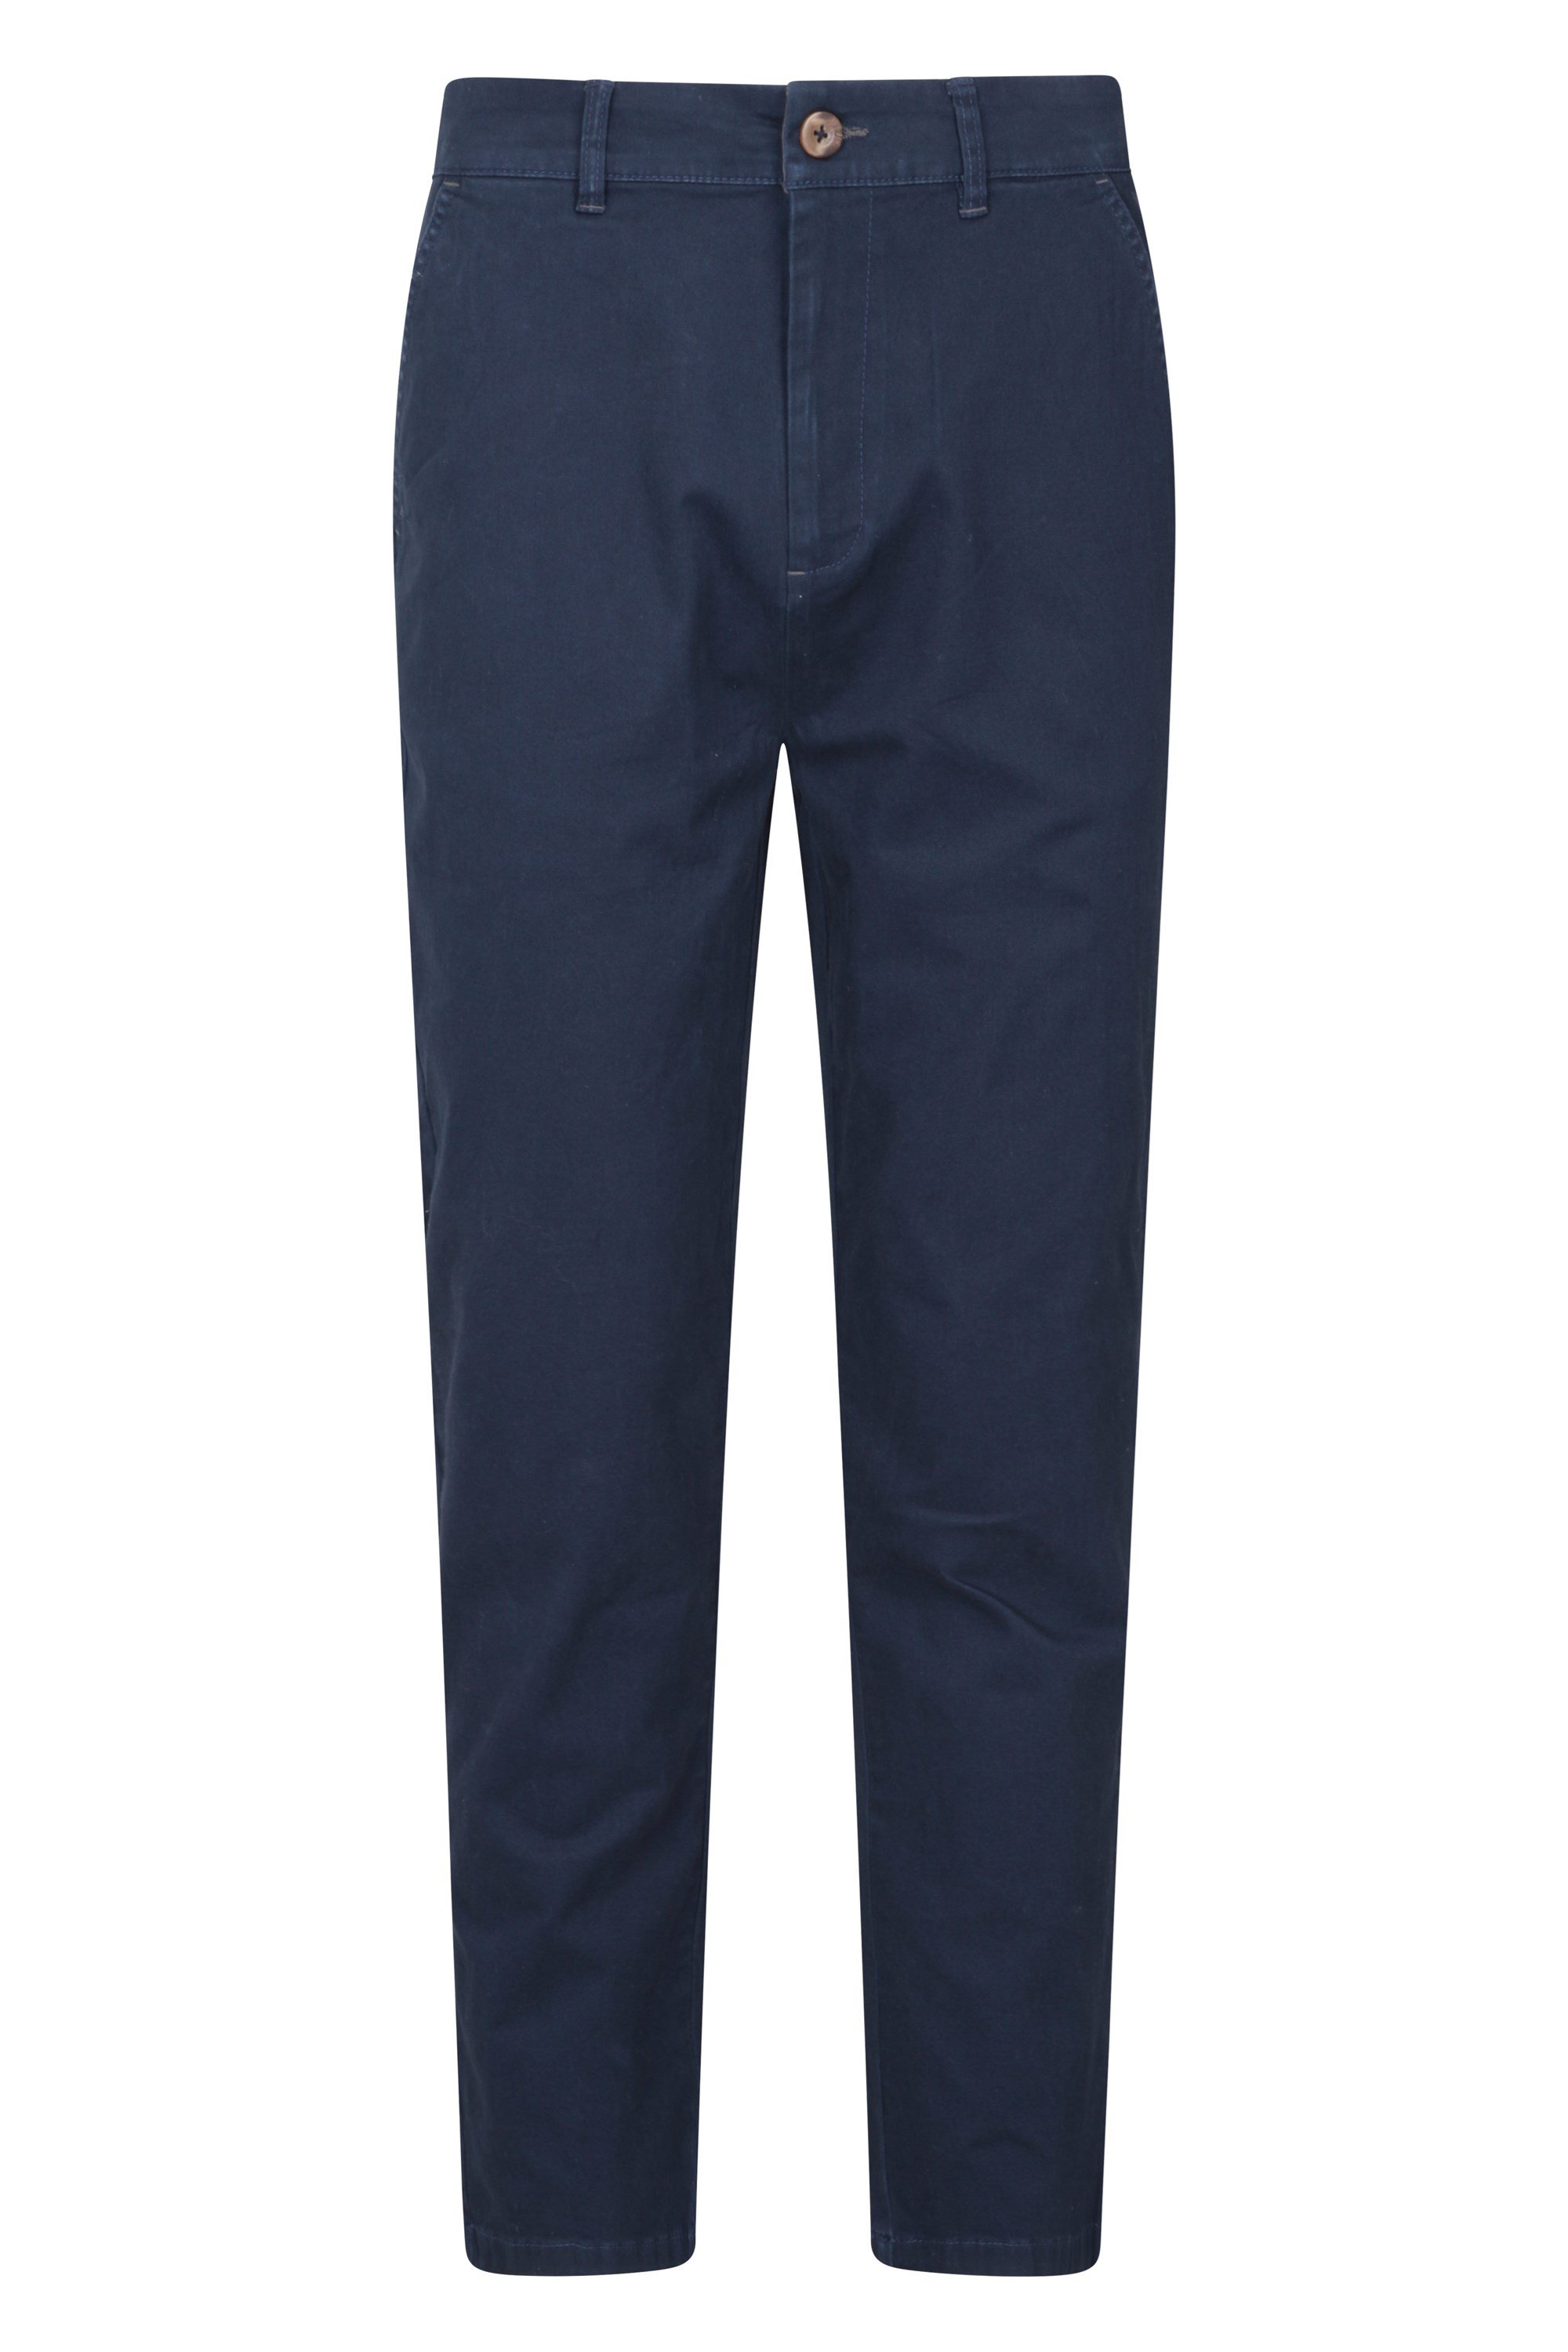 Pantalon Chino Woods Homme - Long - Bleu Marine